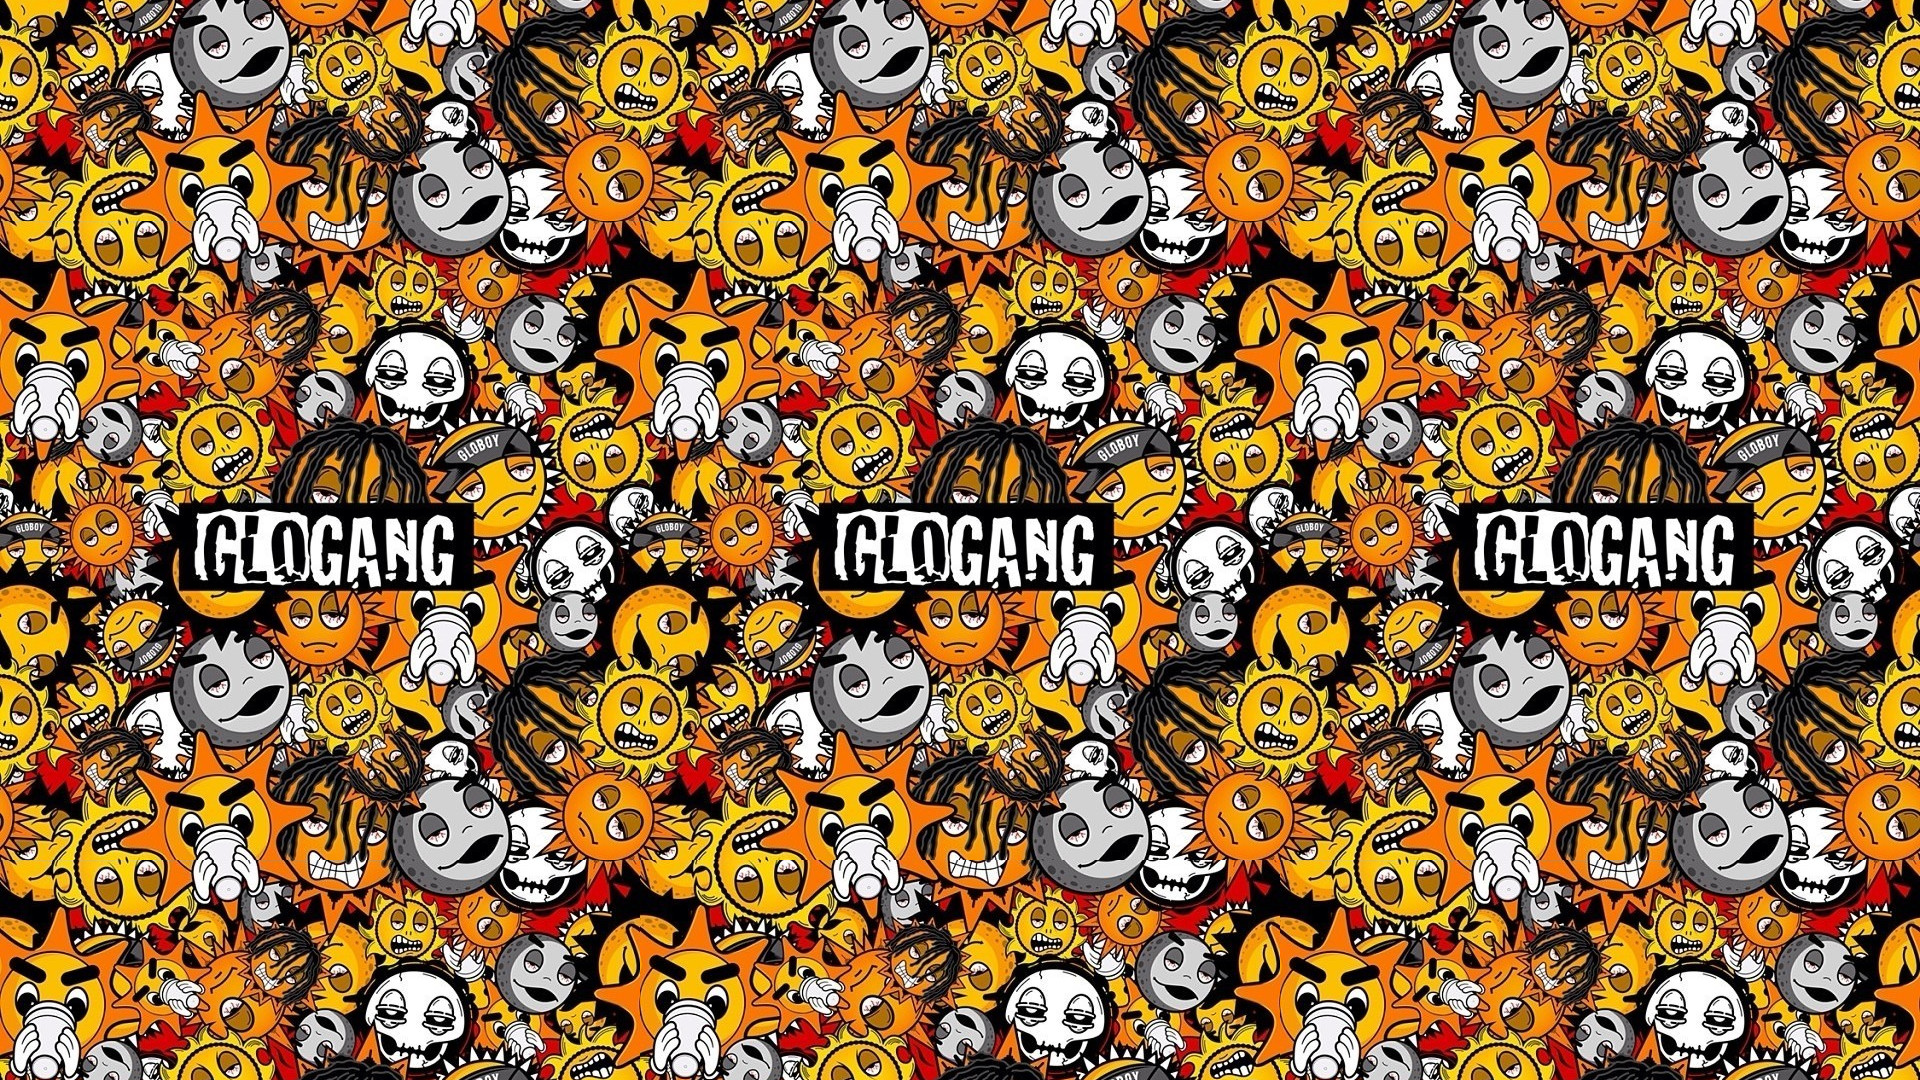 1920x1080 Glo Gang Wallpaper Related Keywords & Suggestions - Glo Gang Wallpaper